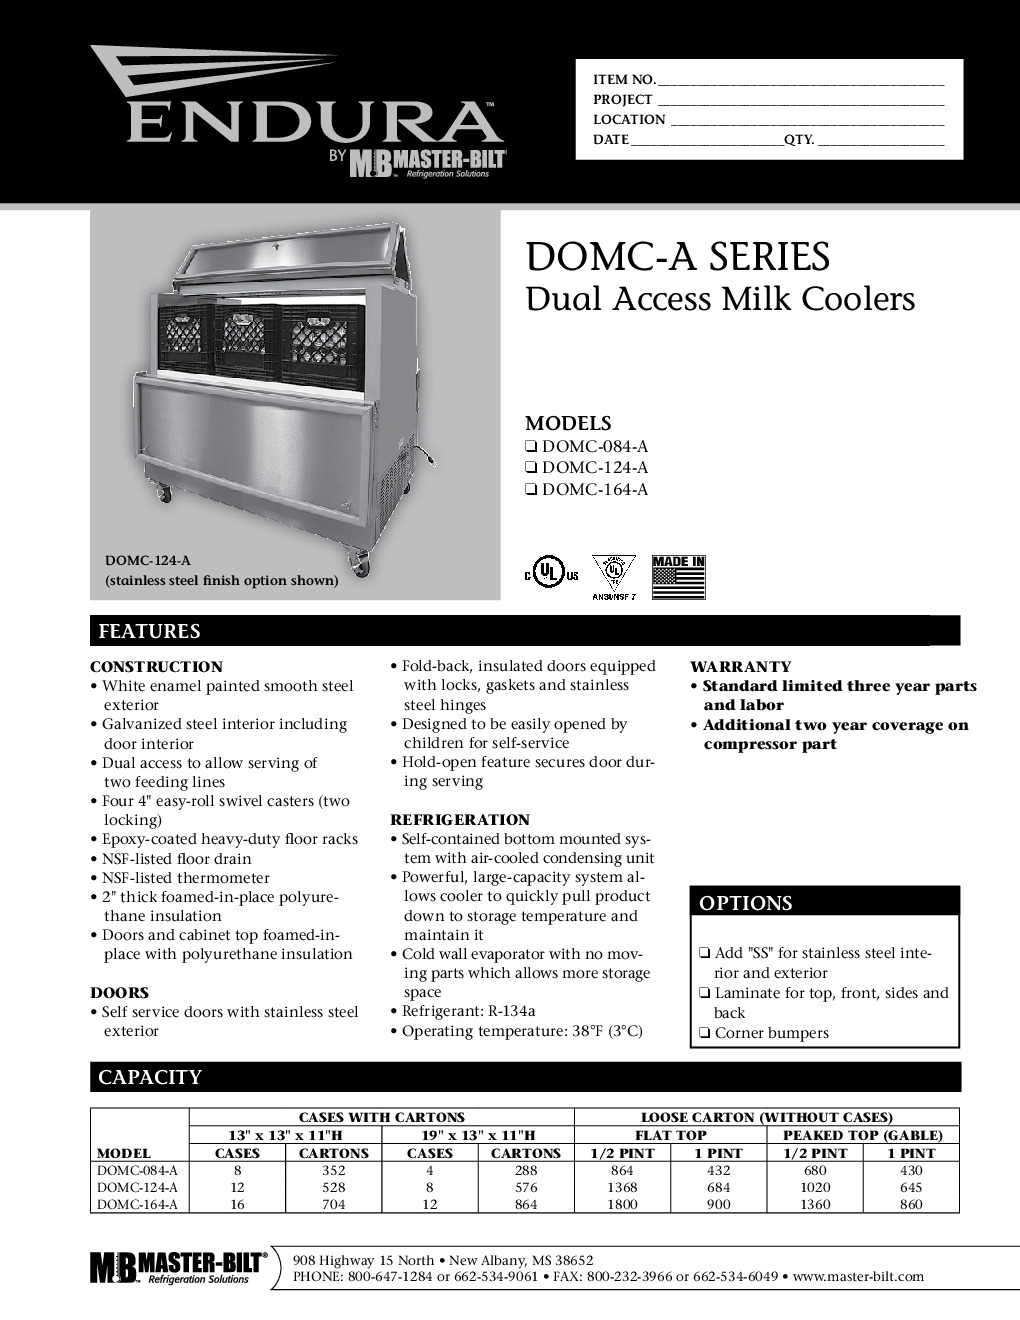 Master-Bilt DOMC-164SS-A Milk Cooler / Station